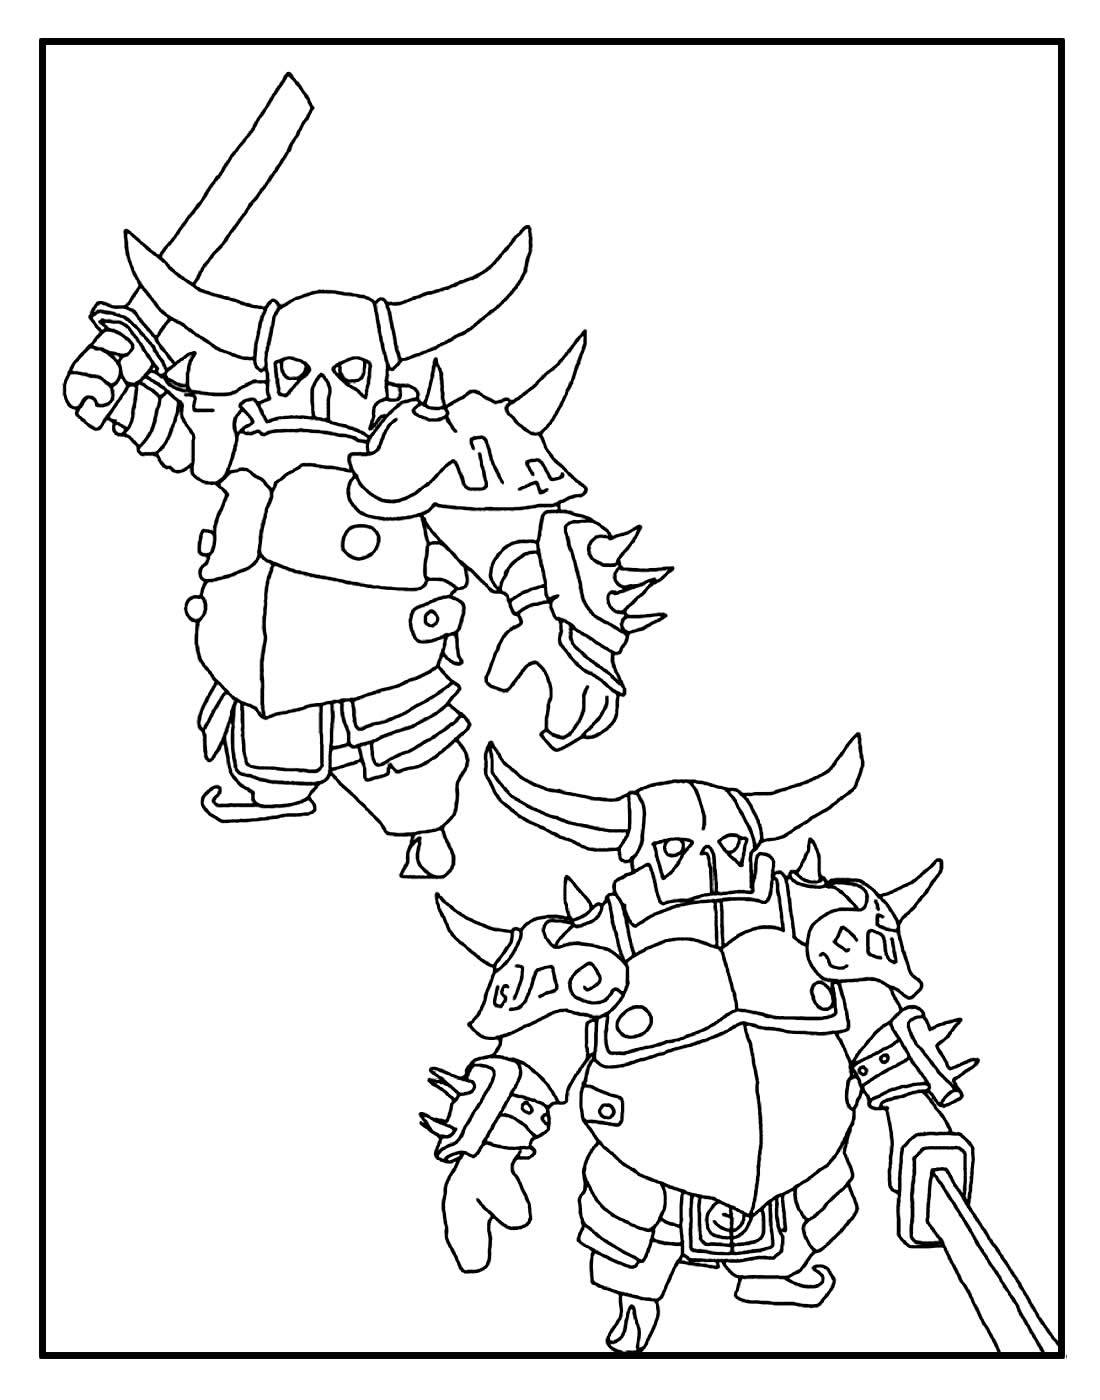 Desenho para colorir de Clash of Clans